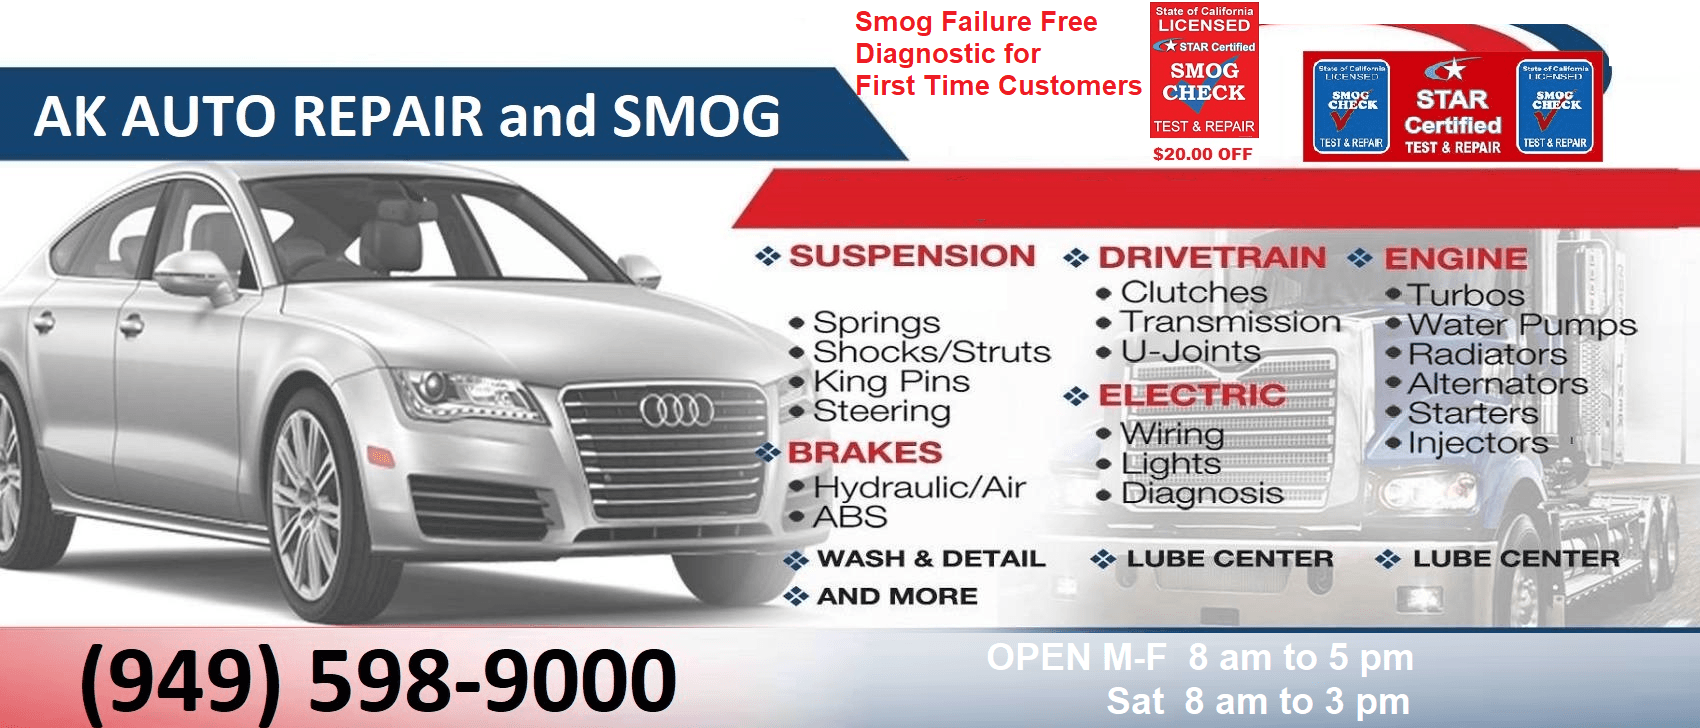 AK Auto Repair and Smog display specials ad